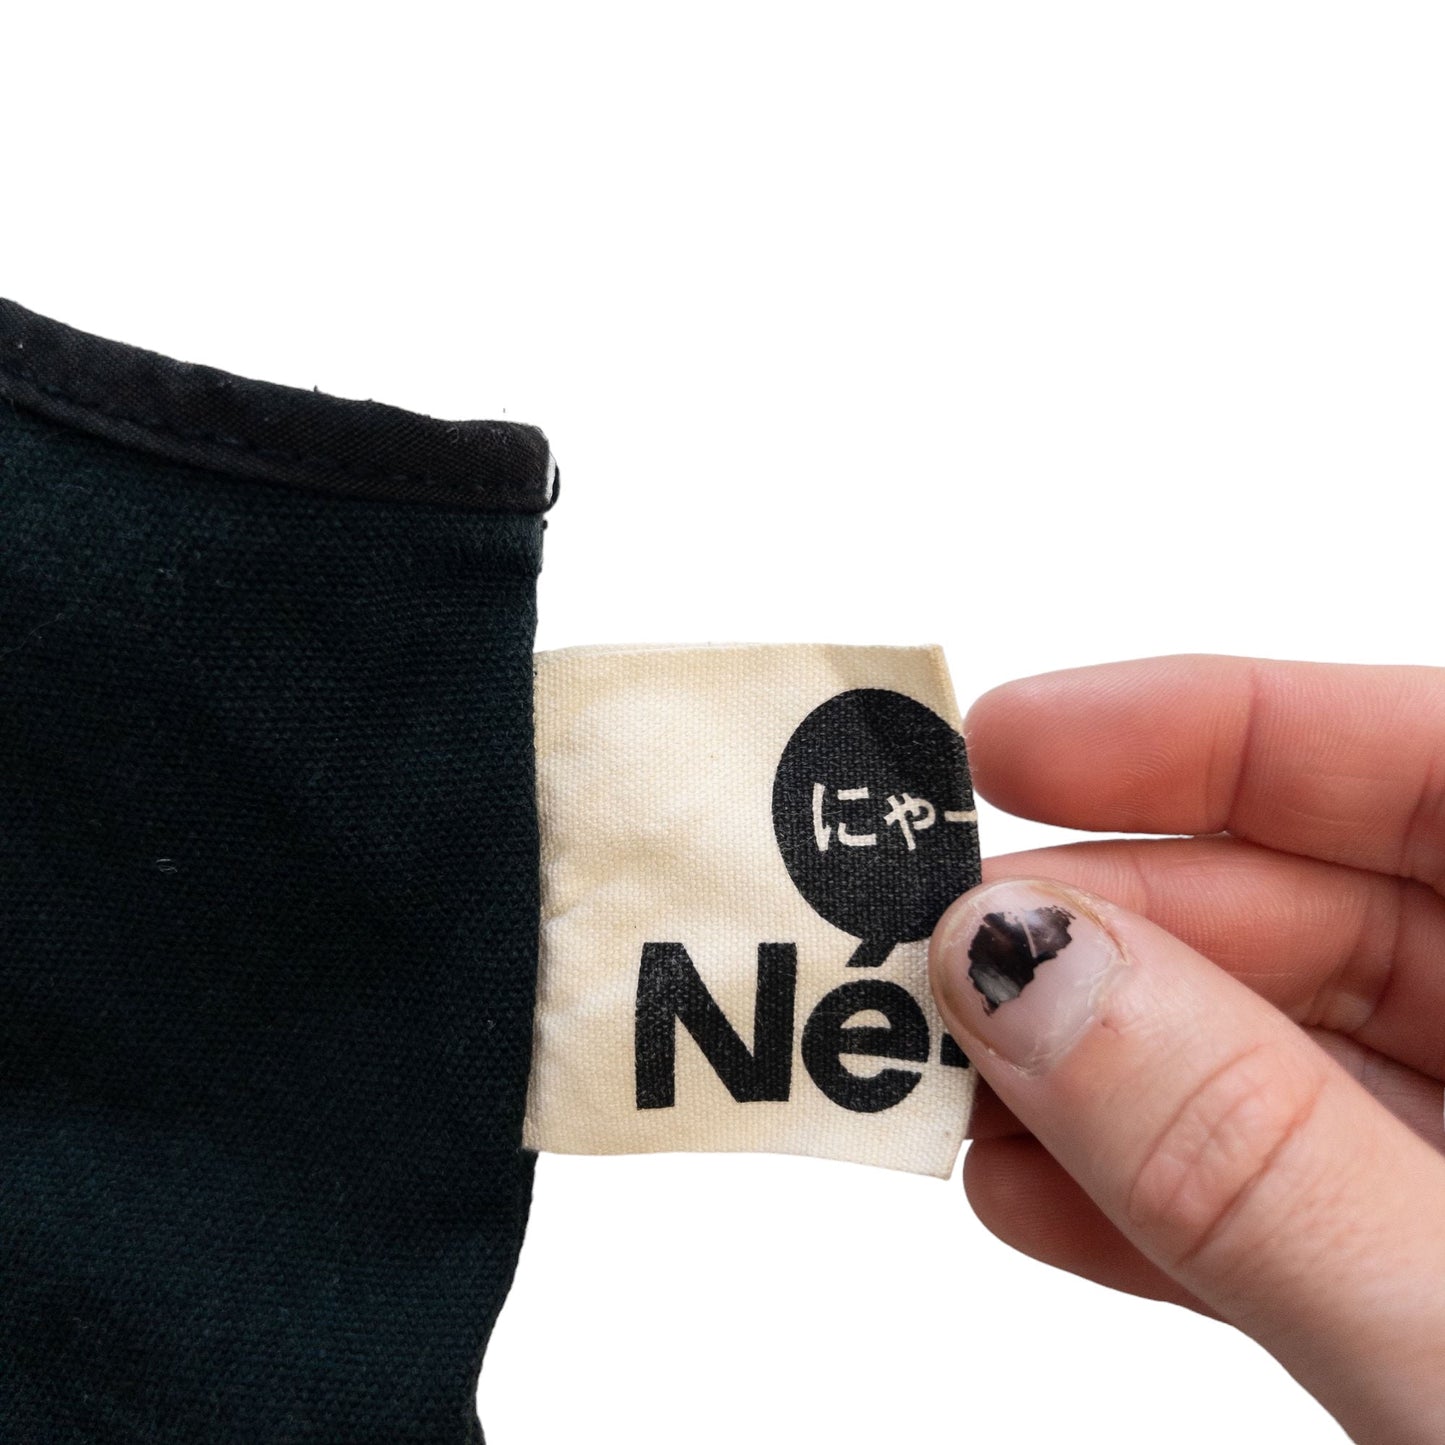 Vintage Ne-net By Issey Miyake Cat Logo Tote Bag